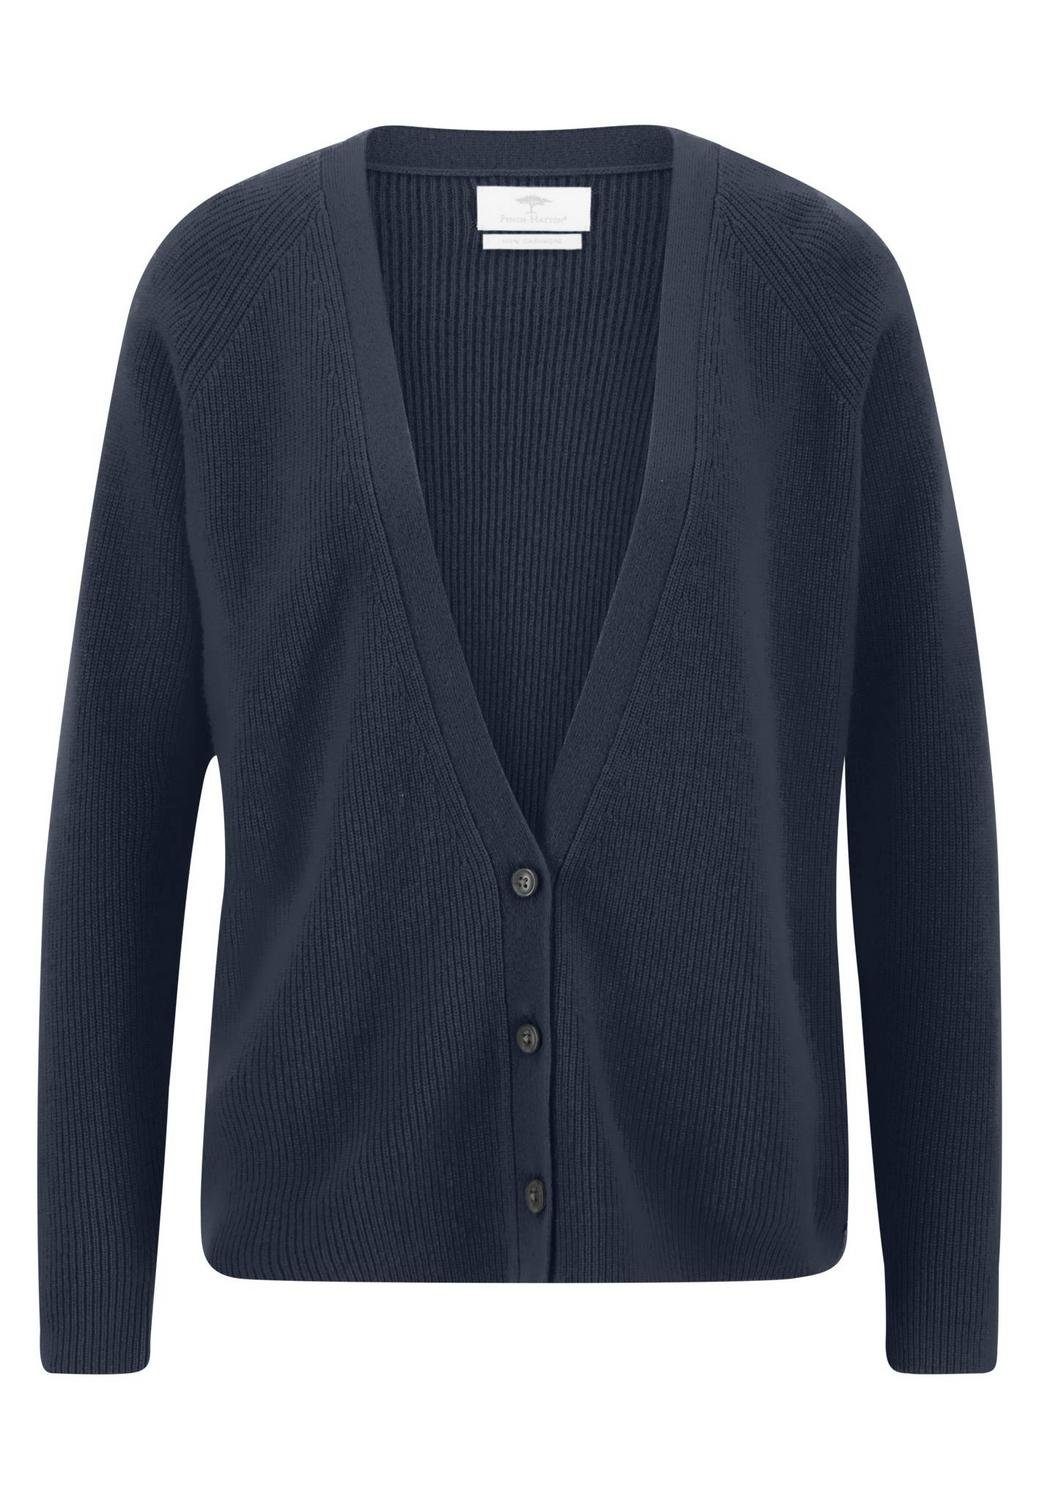 Sweatshirt Rib FYNCH-HATTON Jacket Cashmere